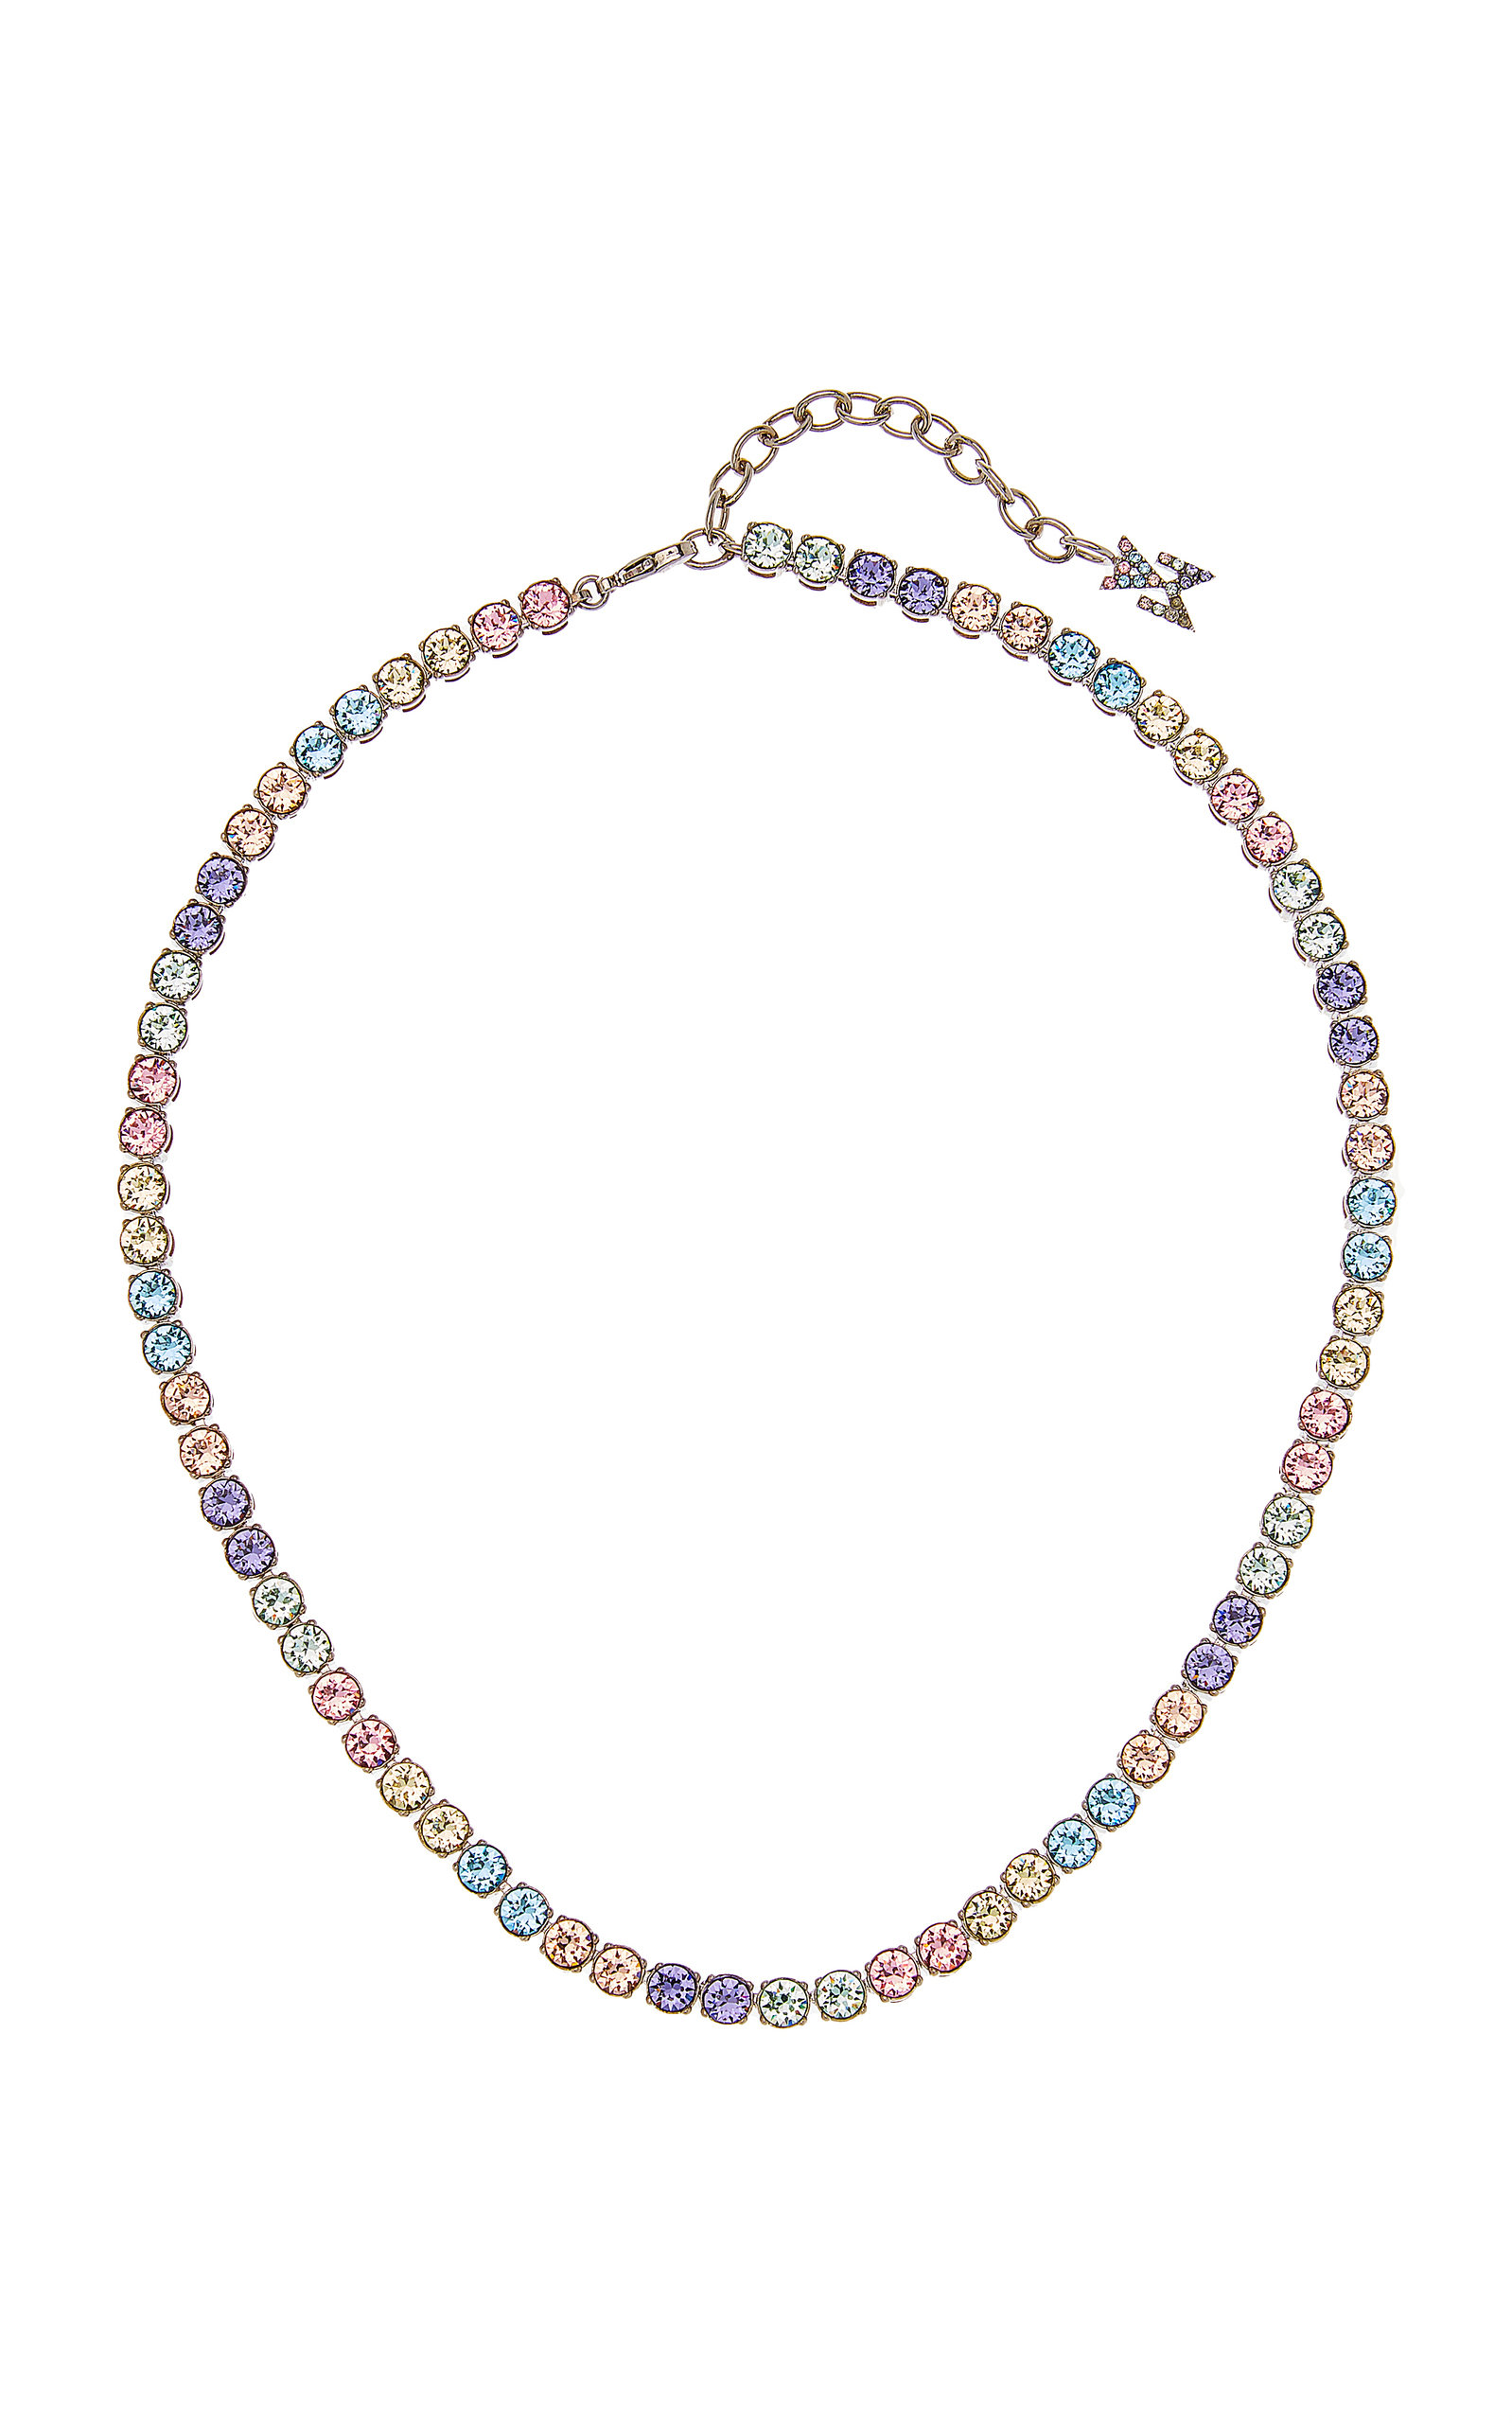 Amina Muaddi - Women's Tennis Rainbow Crystal Necklace - Multi/green - Moda Operandi - Gifts For Her